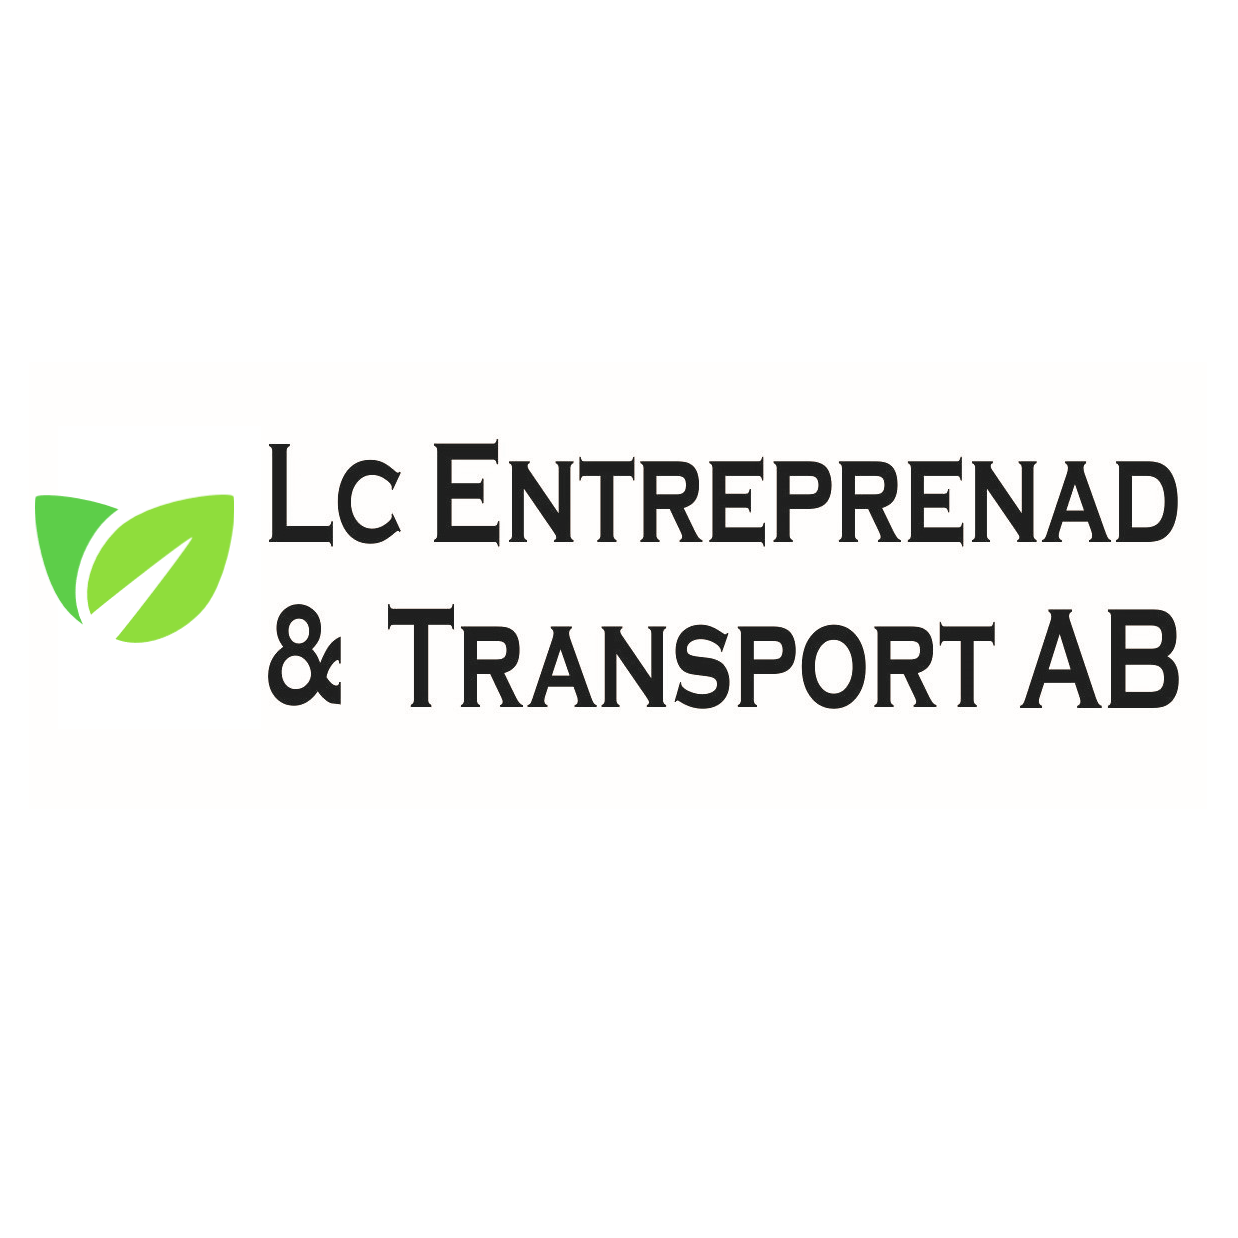 LC Entreprenad & Transport AB